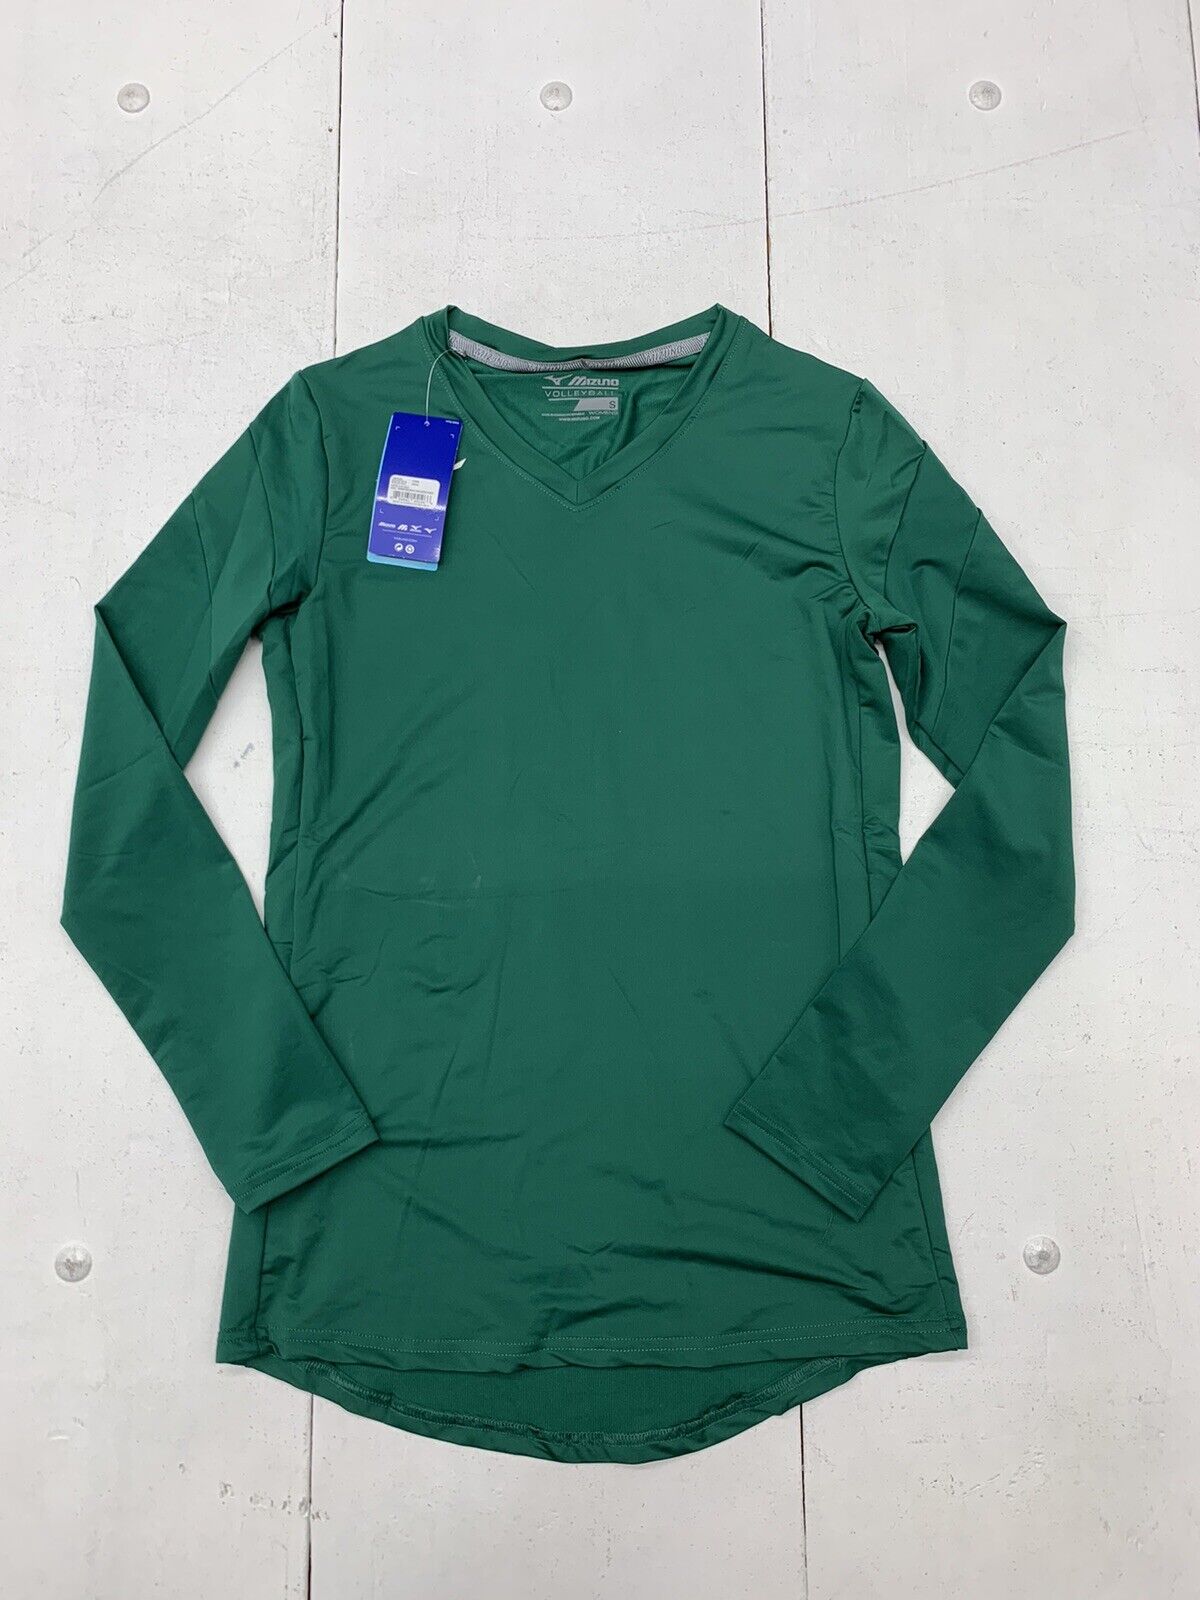 Mizuno Womens Green Long Sleeve Athletic Shirt Size XL - beyond